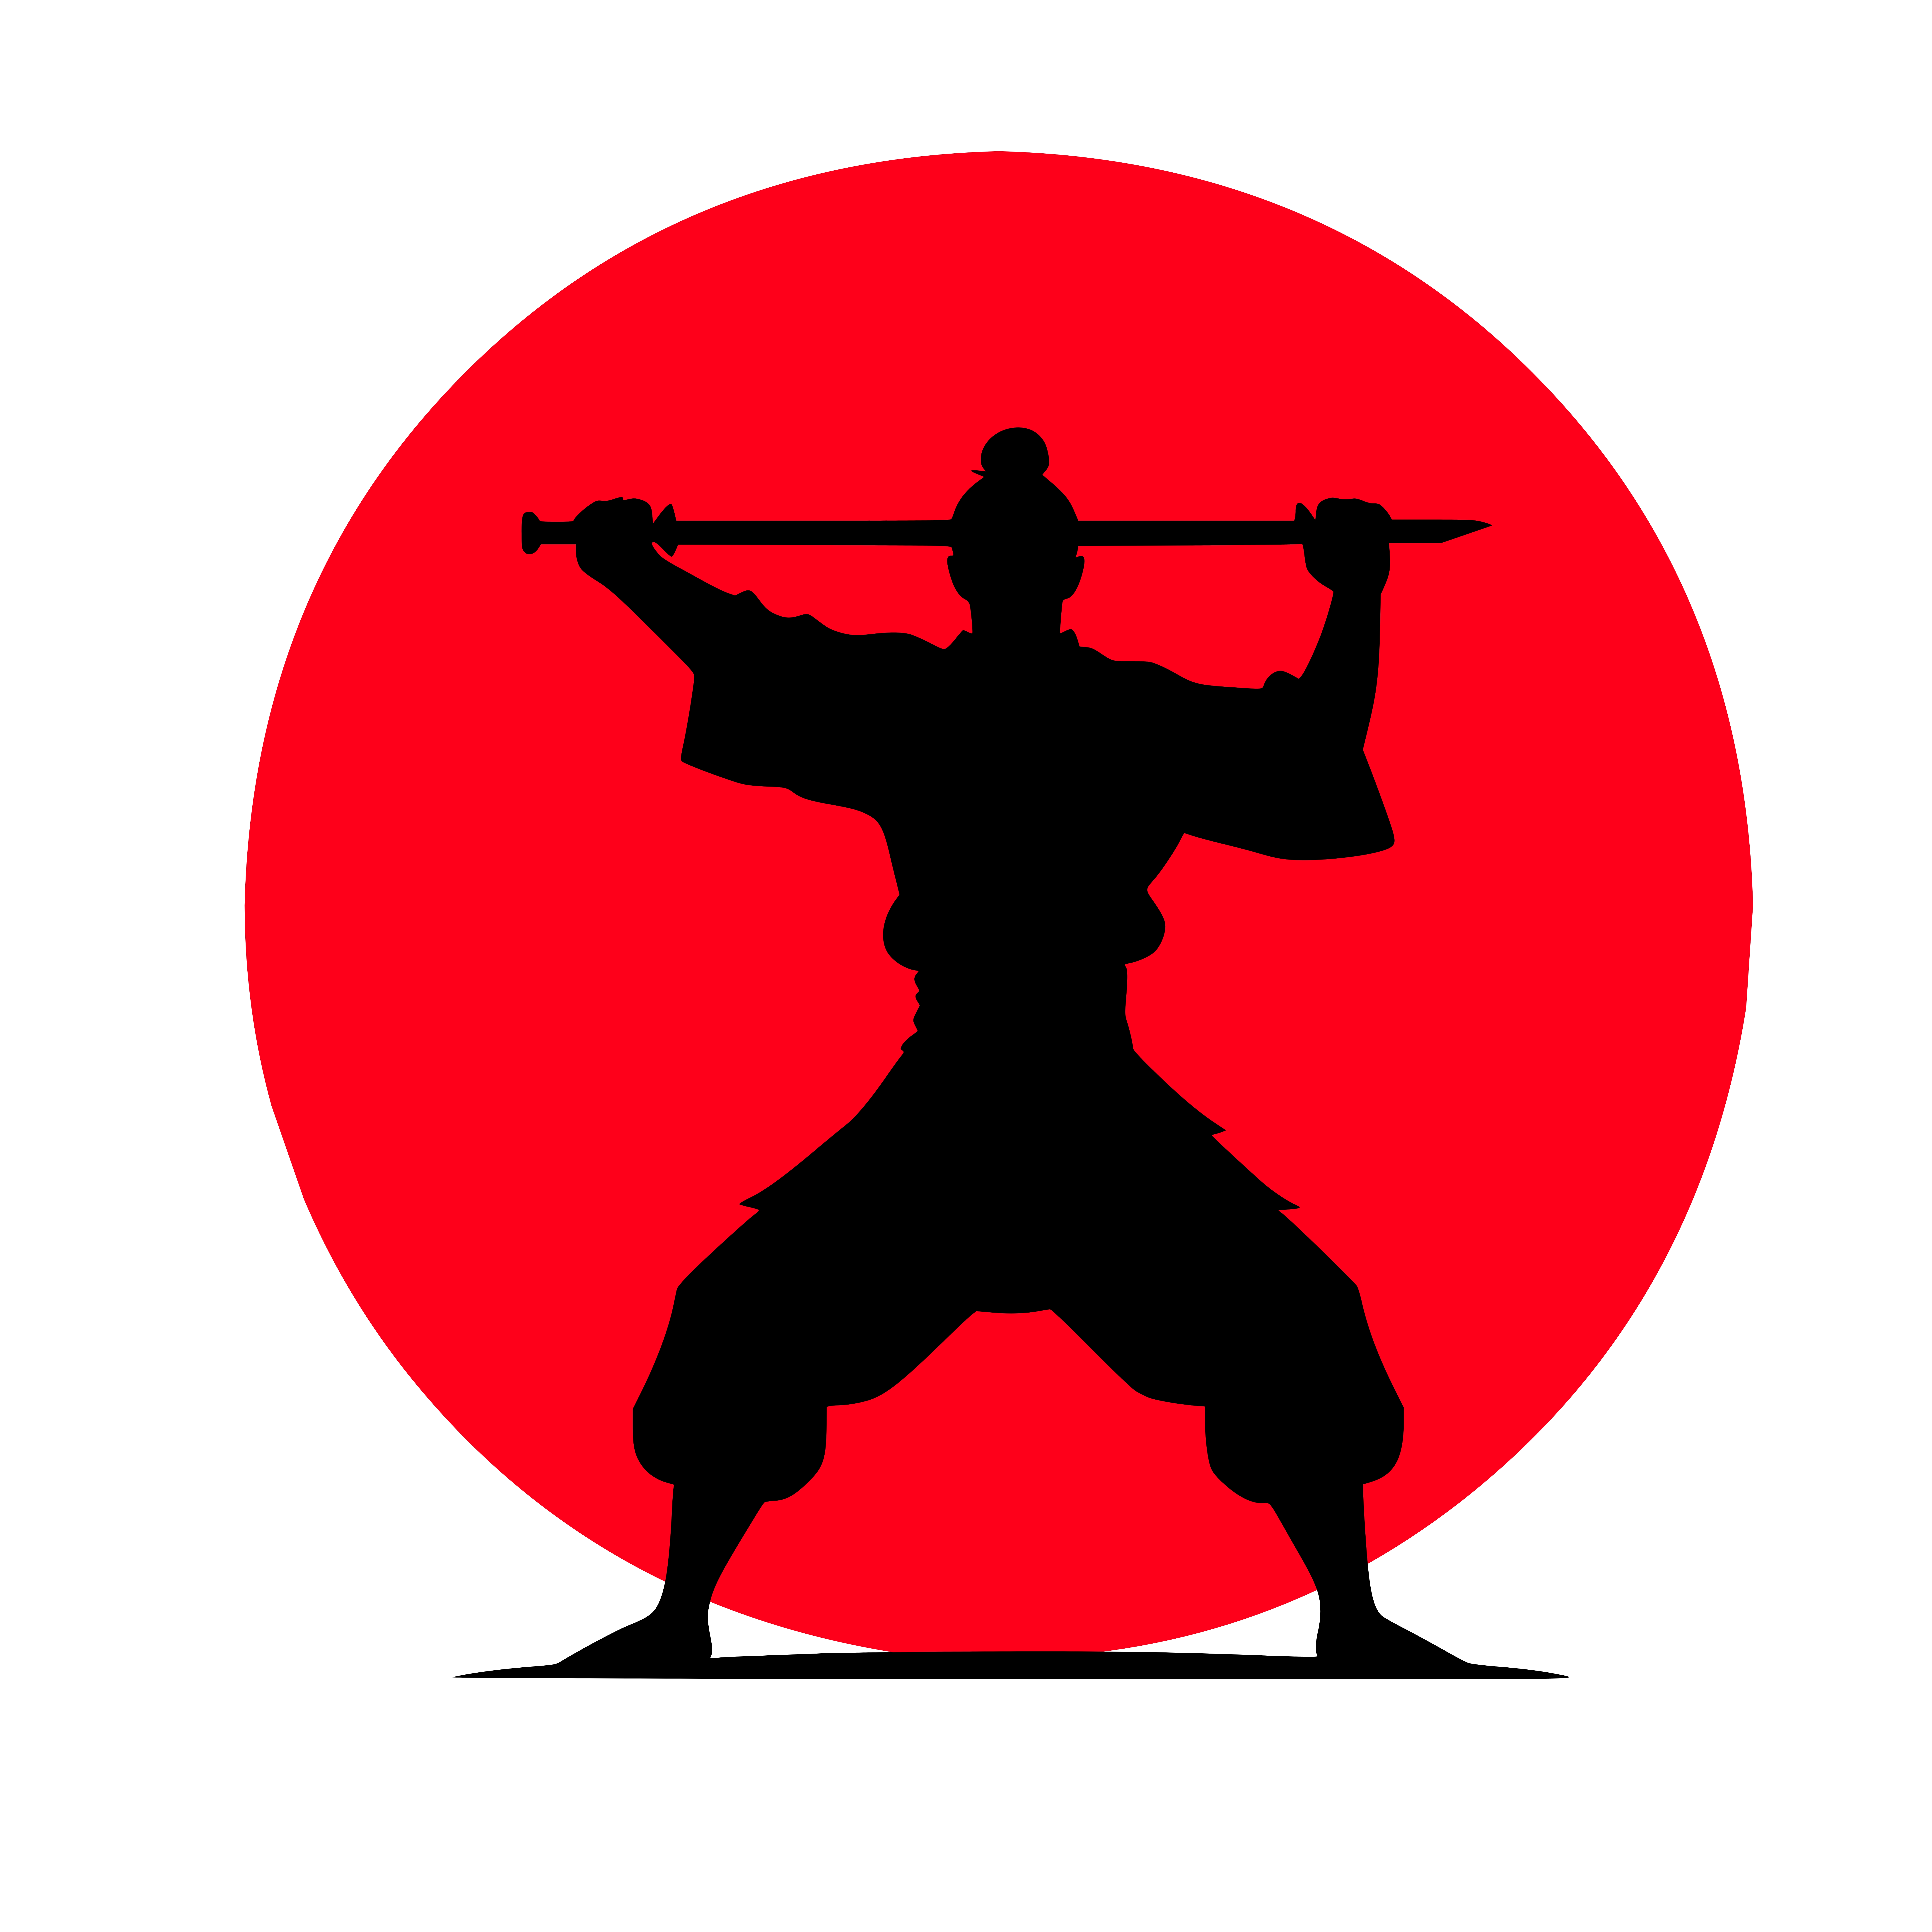 Samurai warrior silhouette design